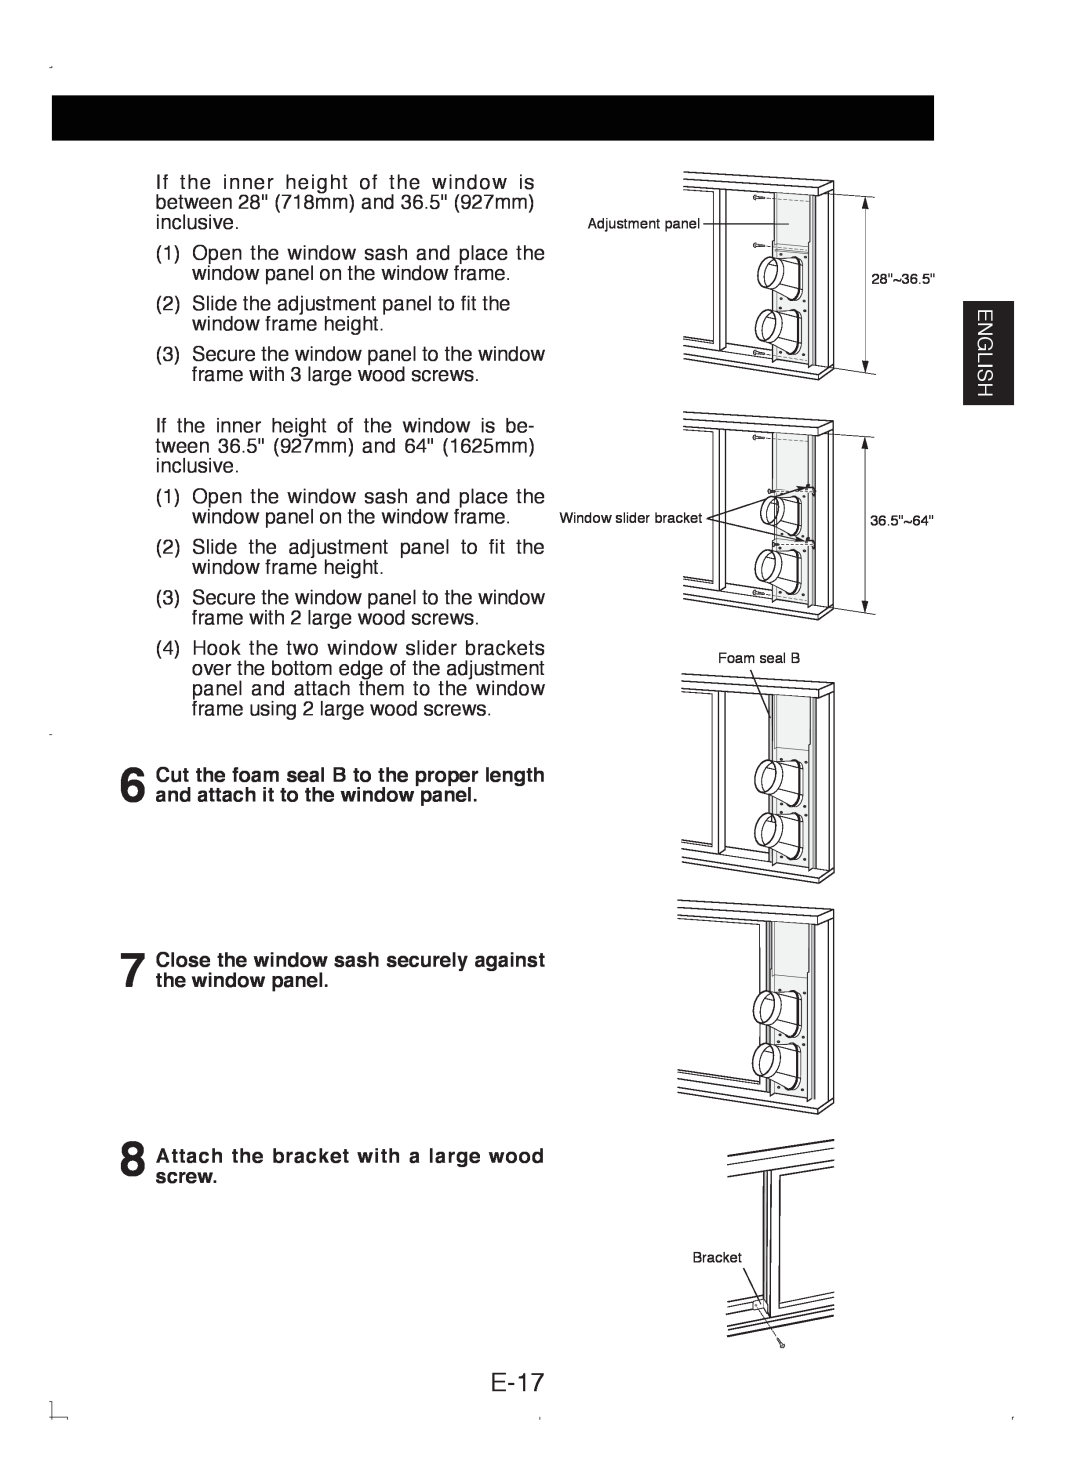 Sony CV-P12PX operation manual E-17, English 